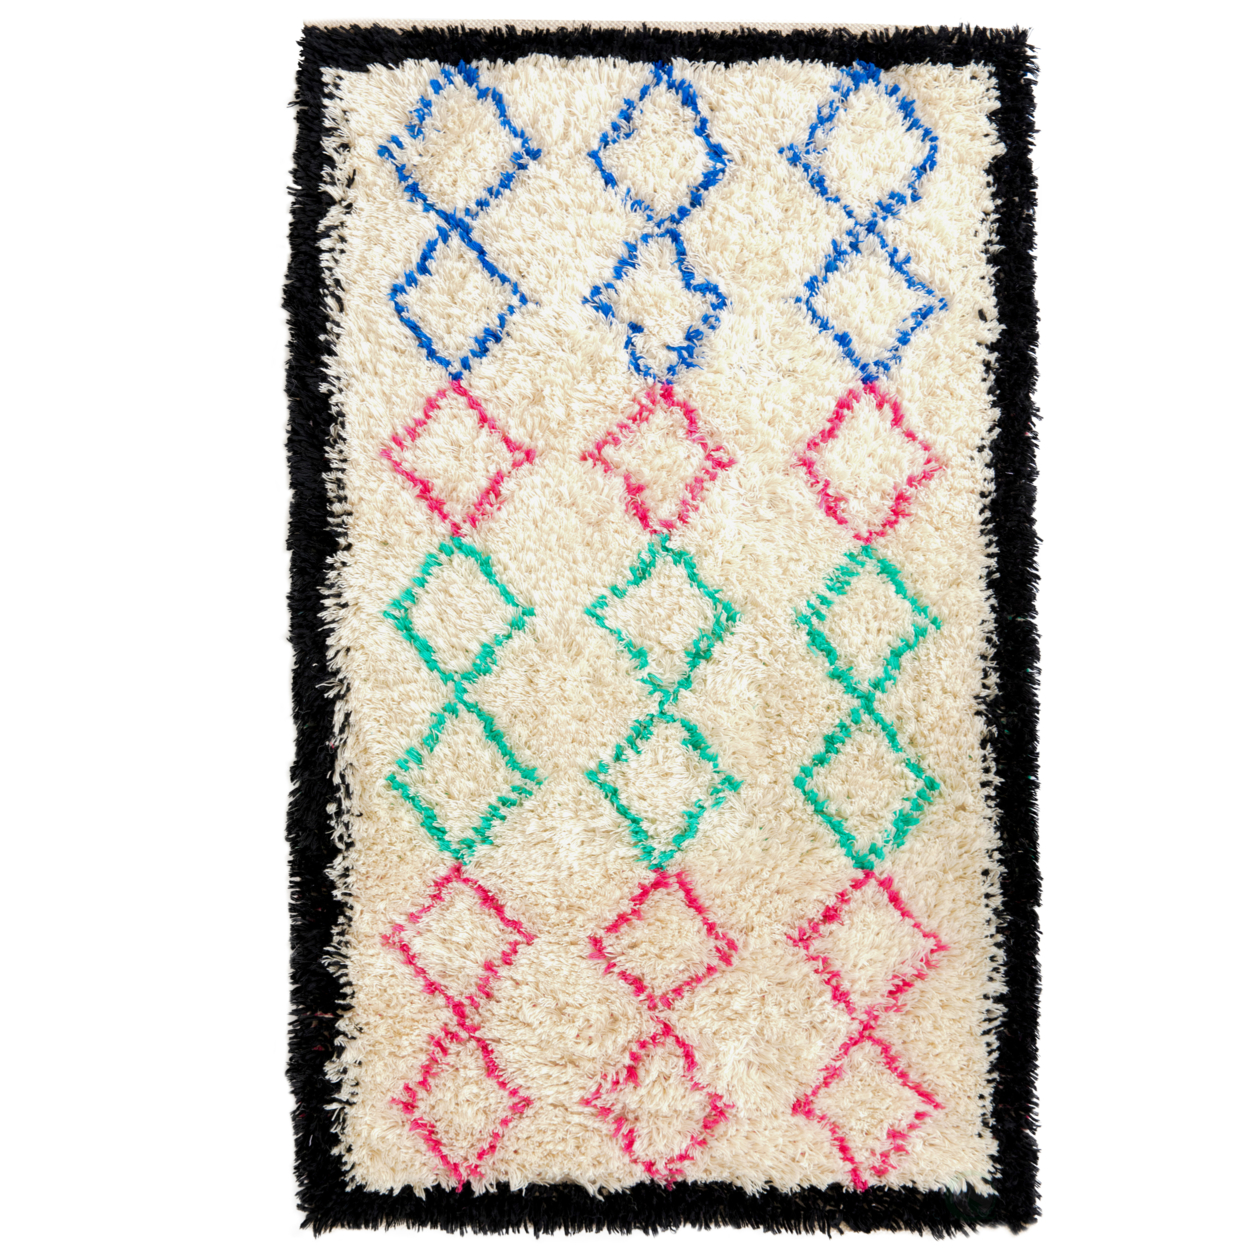 Handwoven Multicolored Geometric Trellis Plush Wool Shag Area Rug, 3' X 5'